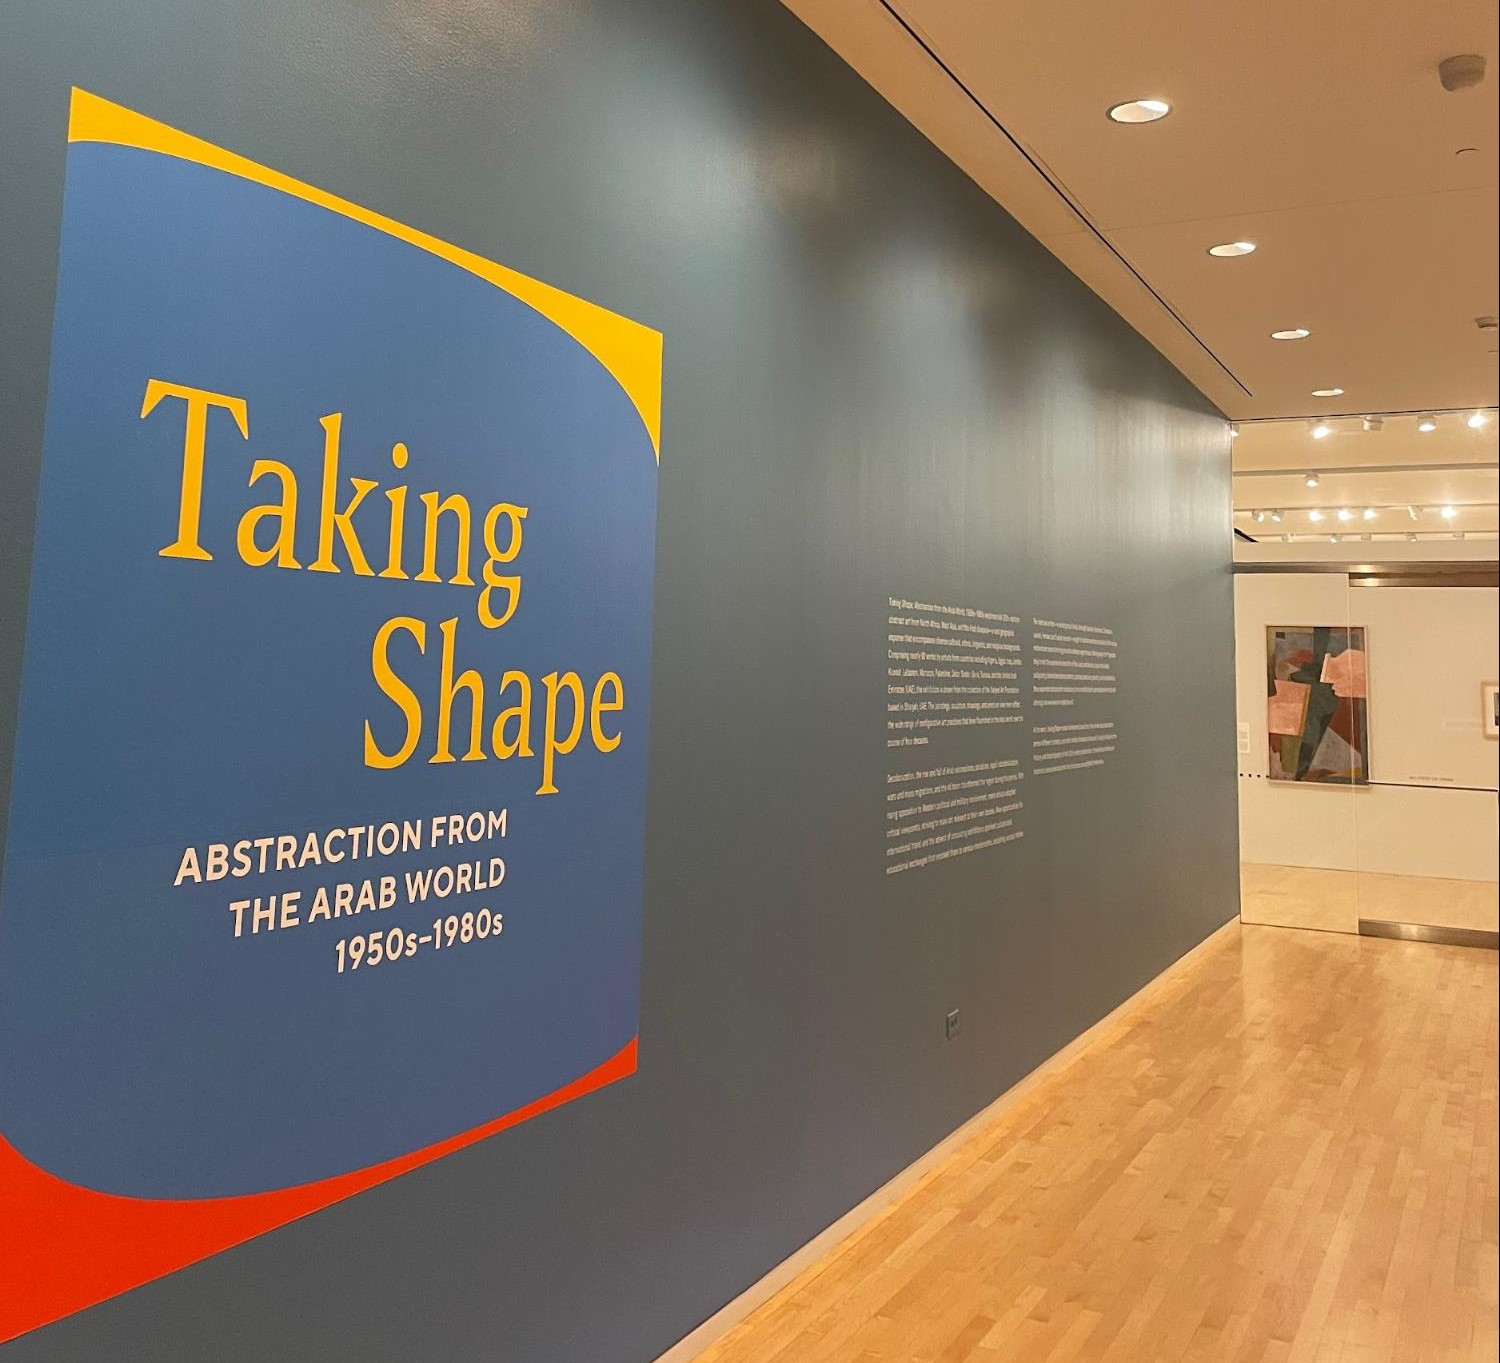 The Block Museum's latest exhibit, “Taking Shape,” brings creators